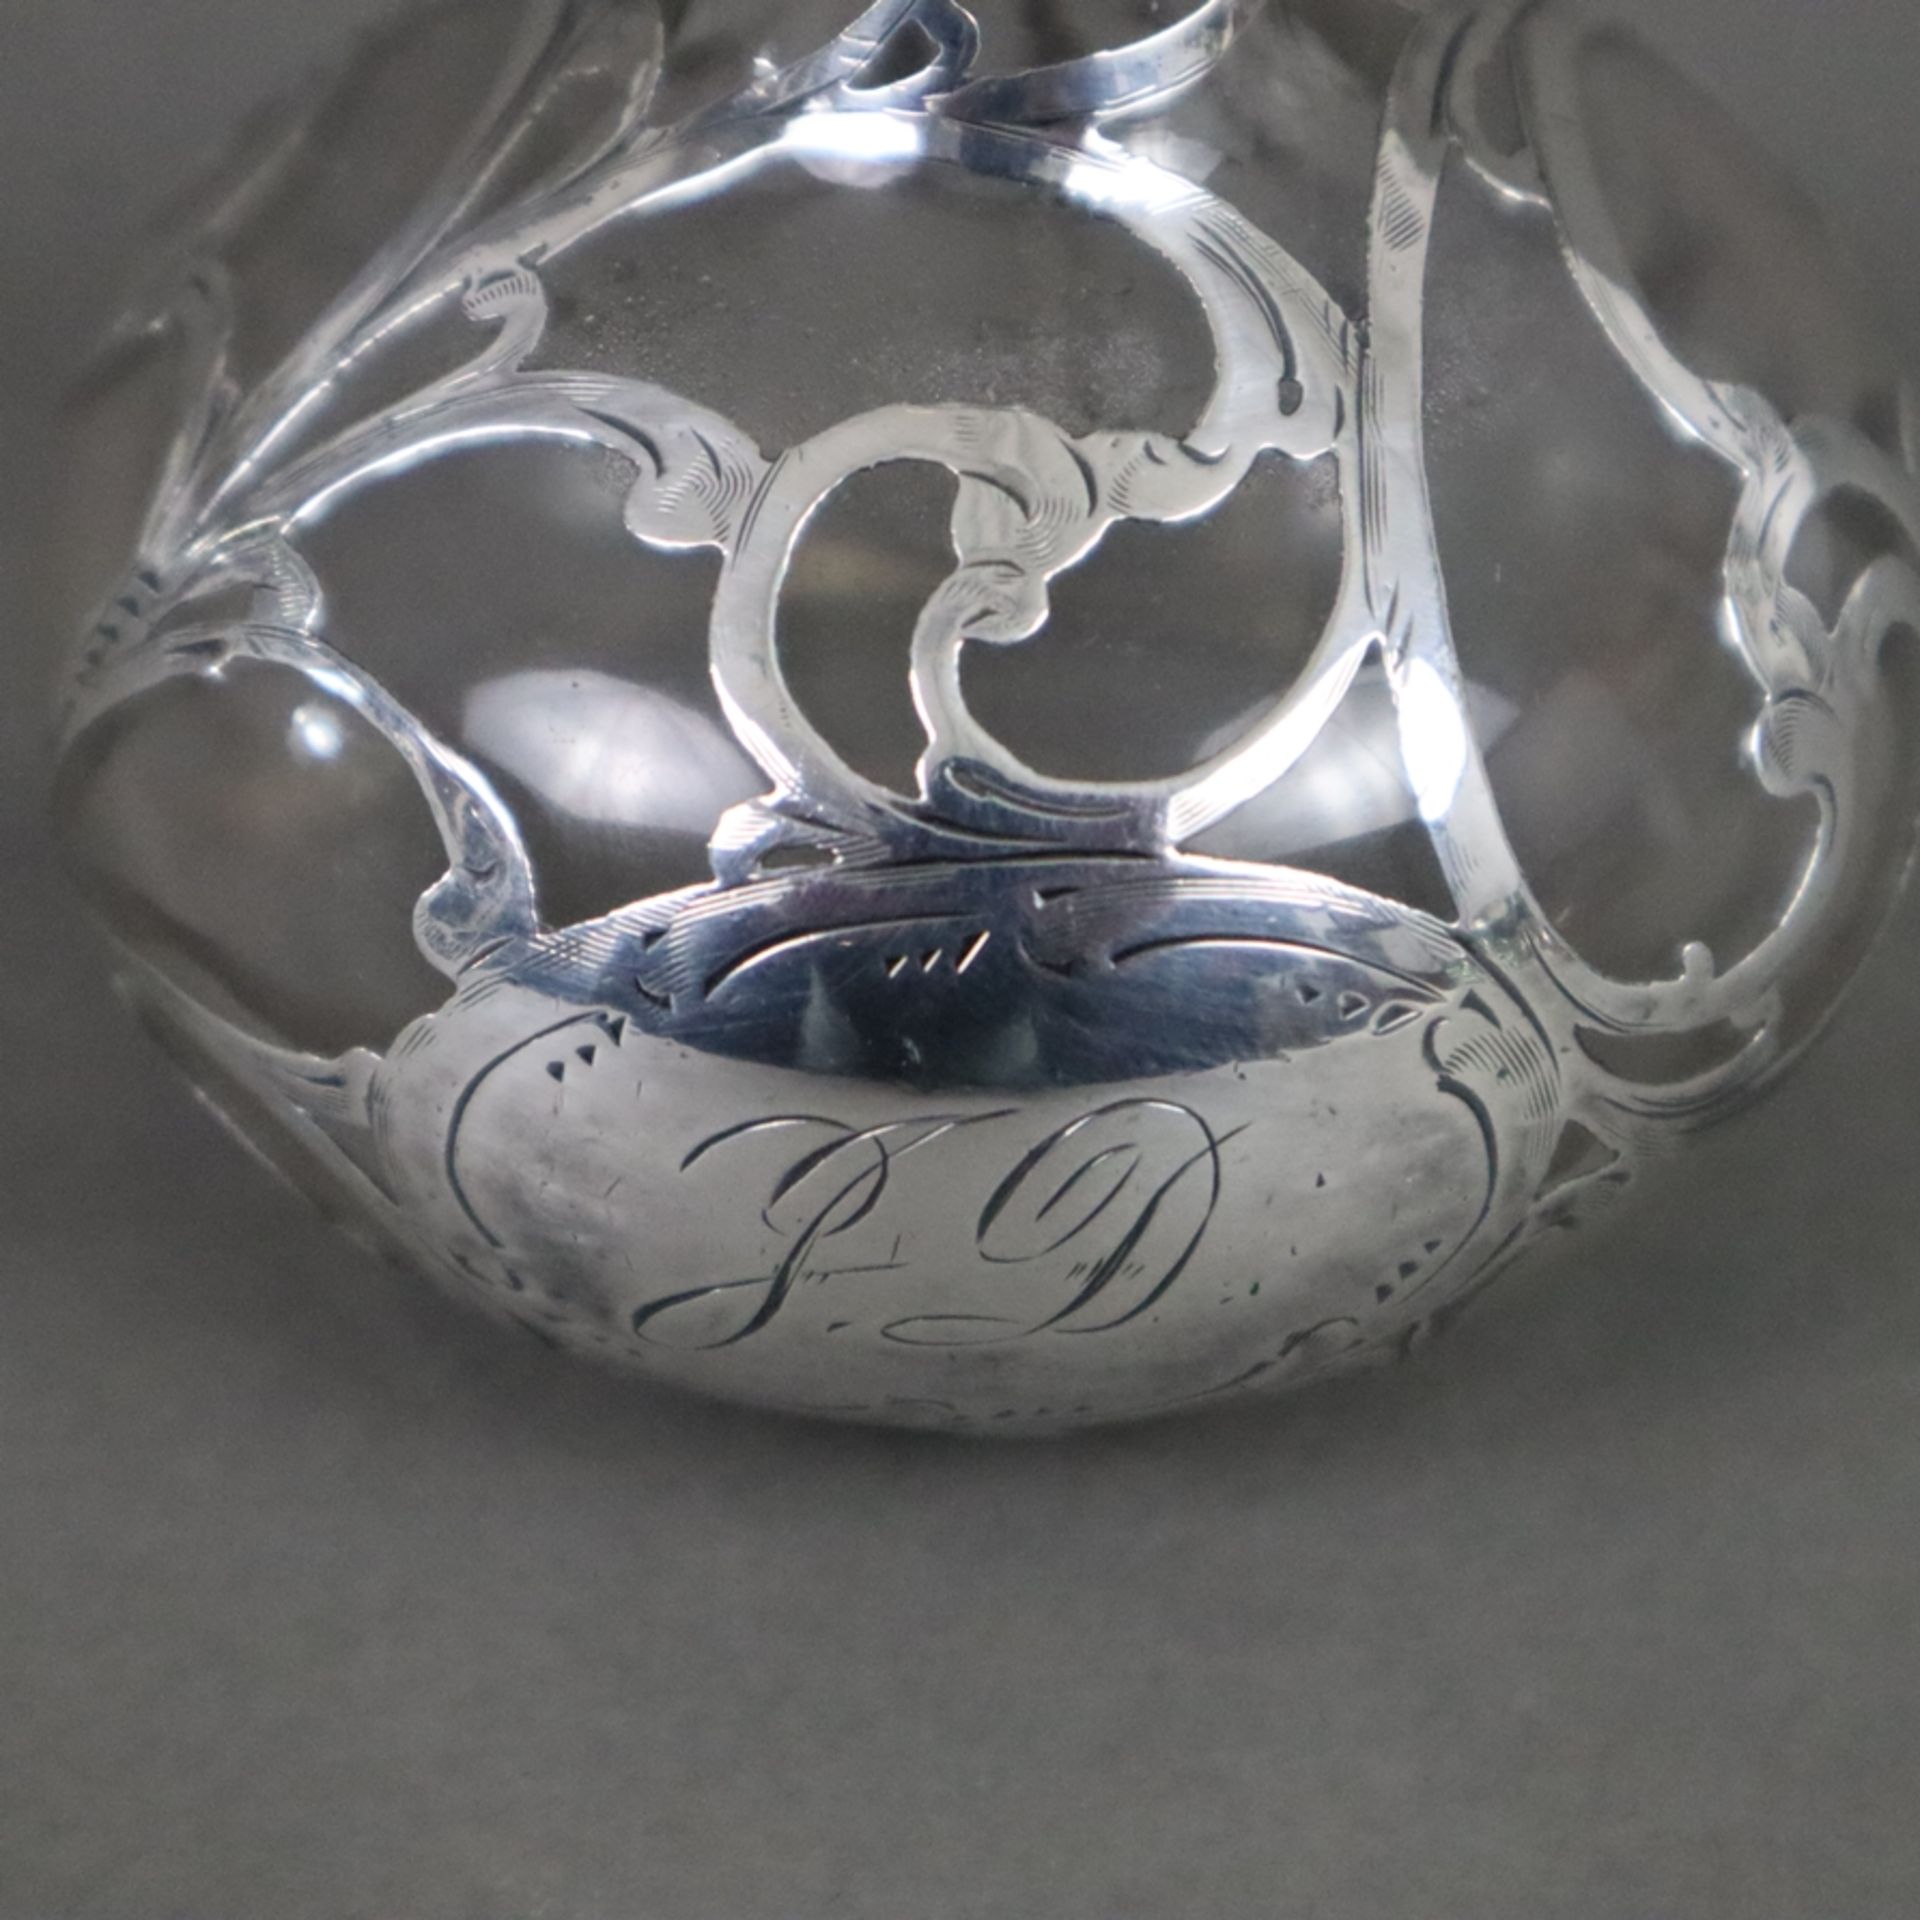 Parfümflakon - USA, flächendeckend mäandrierender Jugendstil-Rankendekor in Silver-Overlay-Technik, - Image 4 of 8